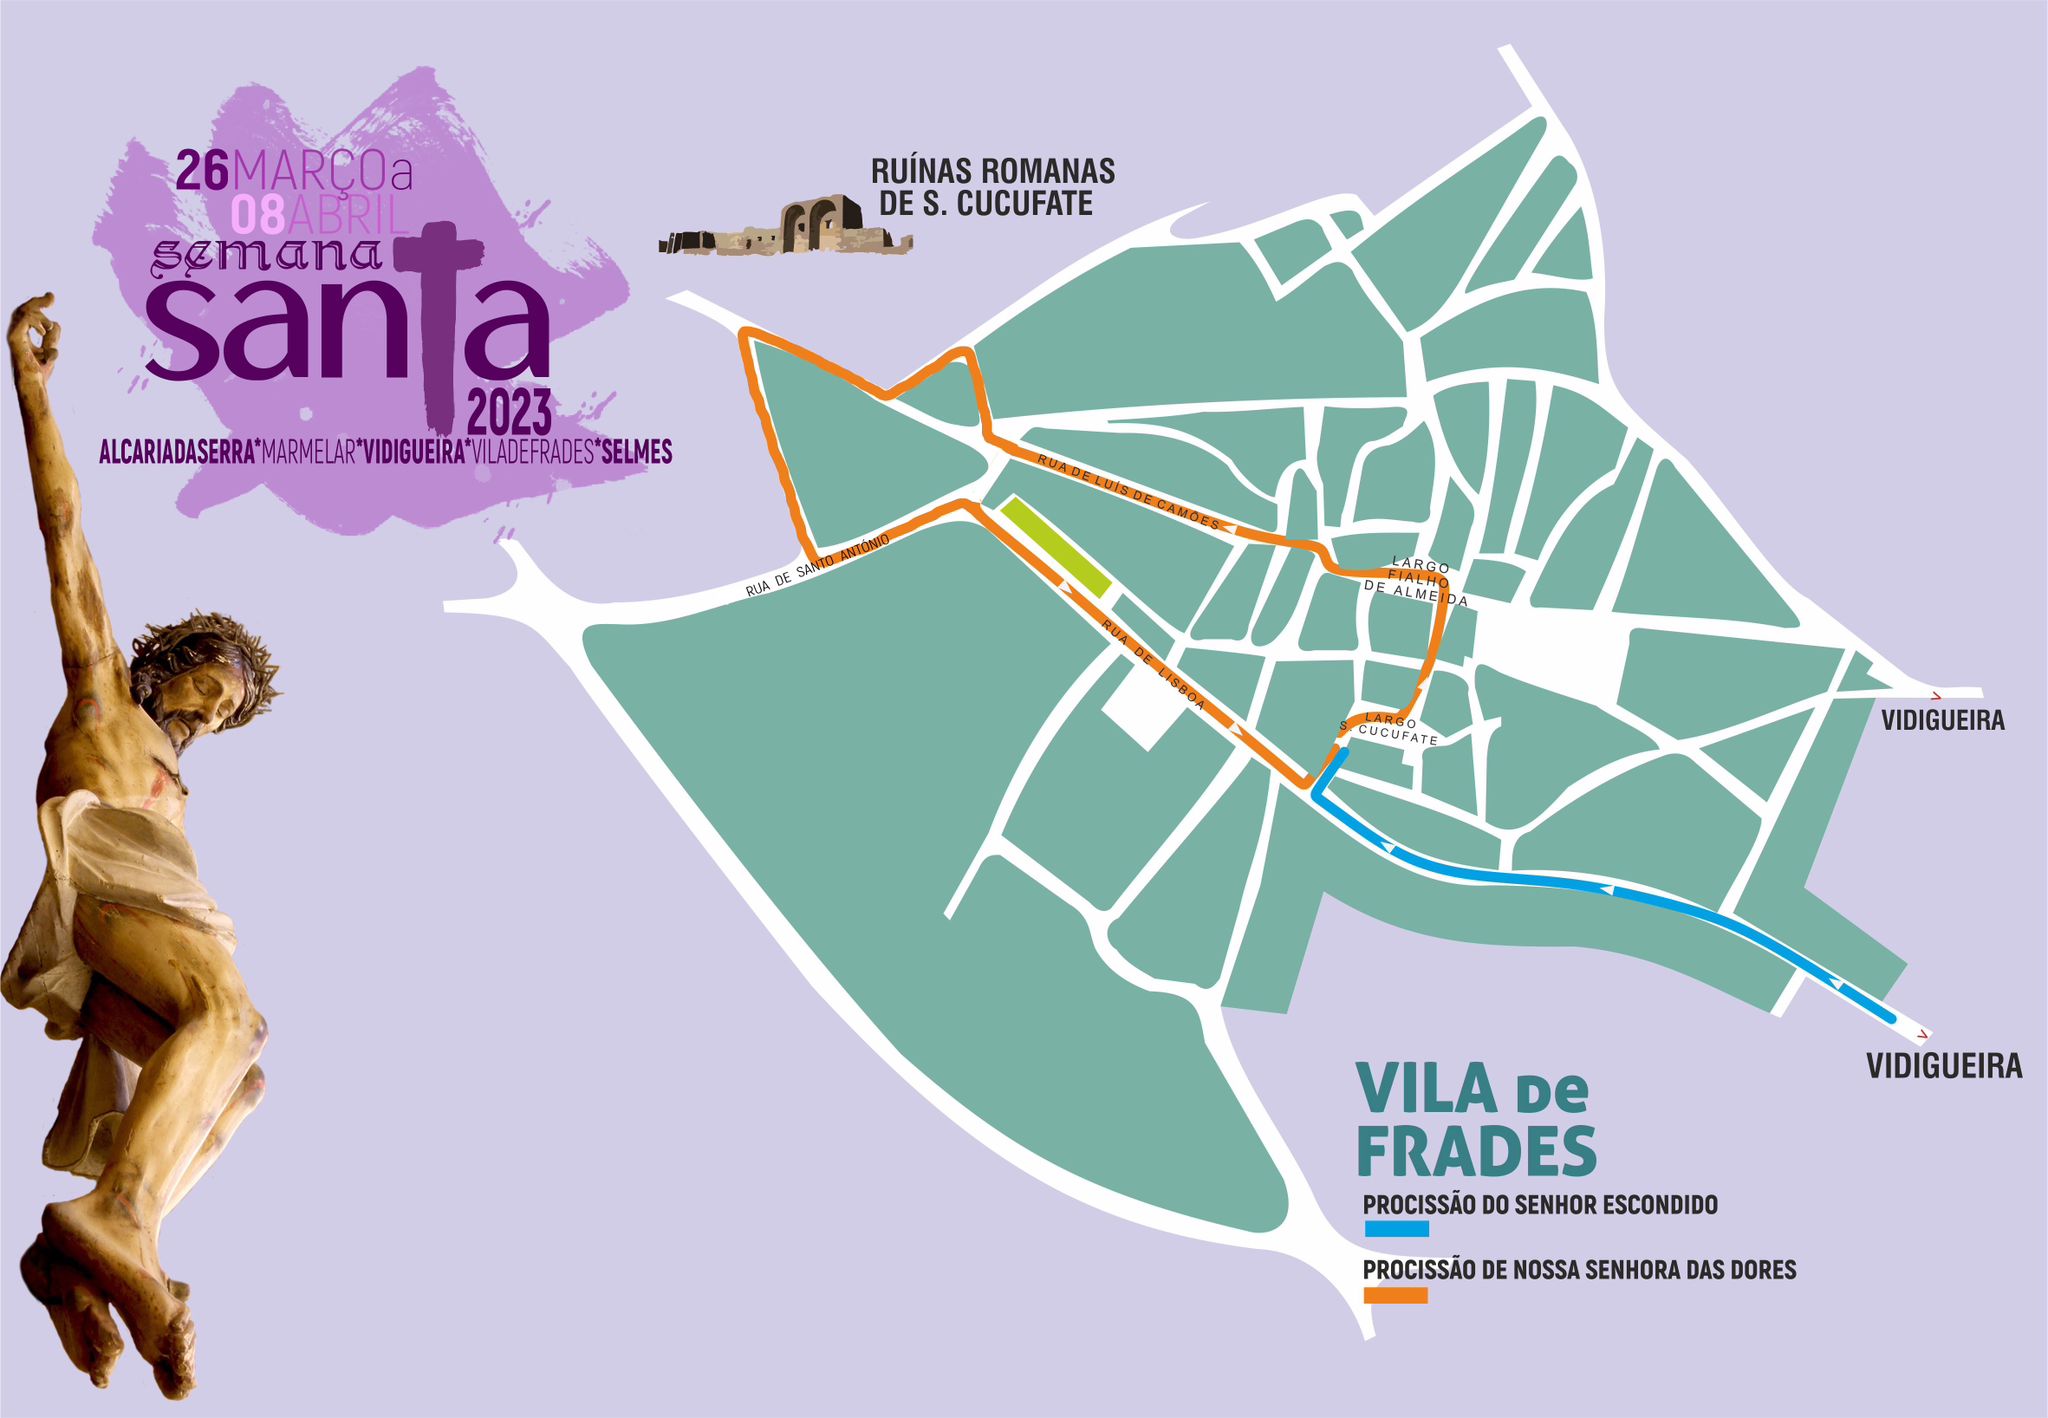 Mapa de Vila de Frades para as Festividades da Semana Santa 2023